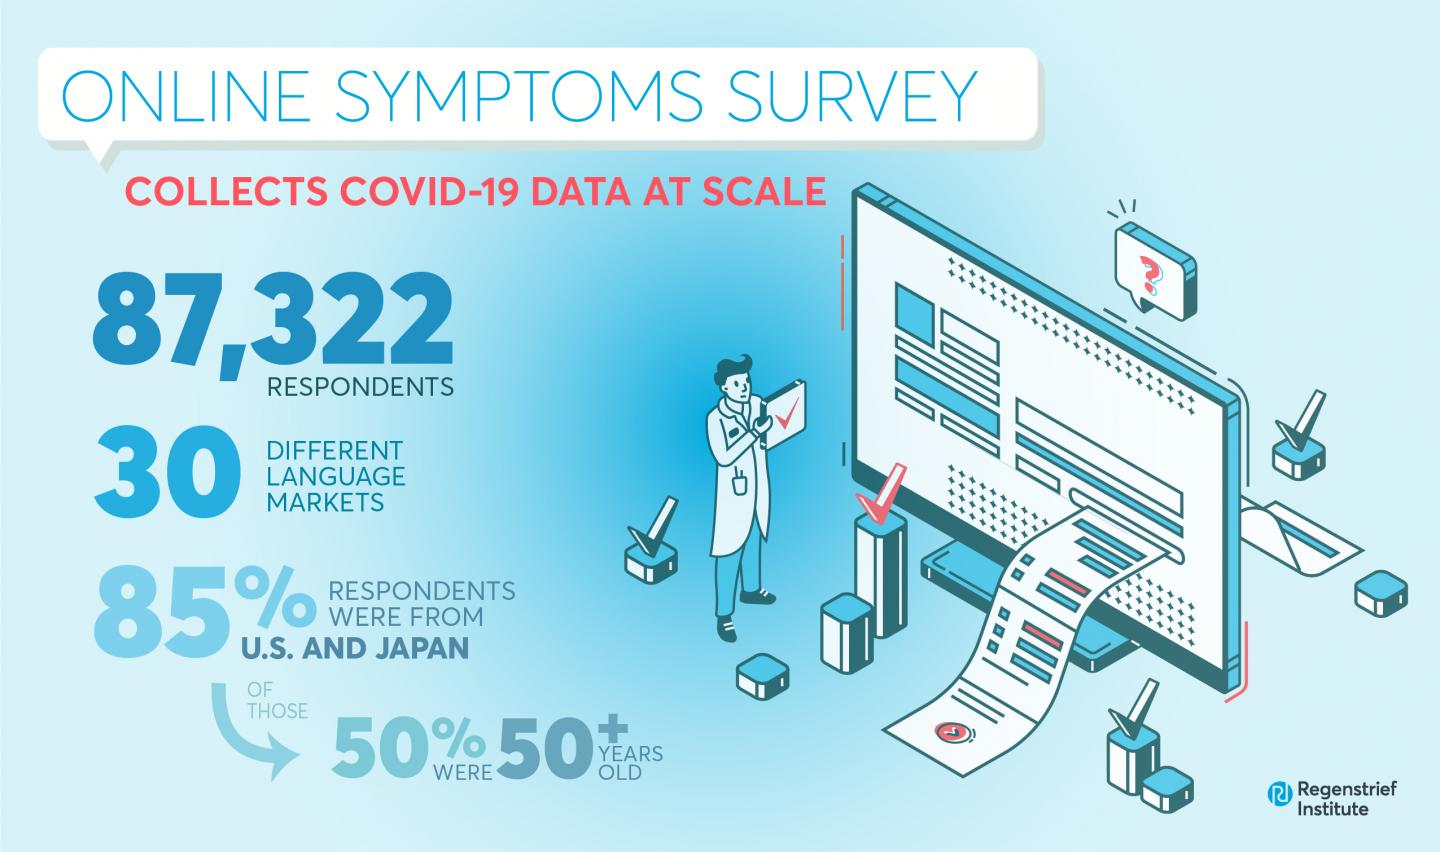 Novel survey methodology captures data on COVID-like symptoms in the community at large